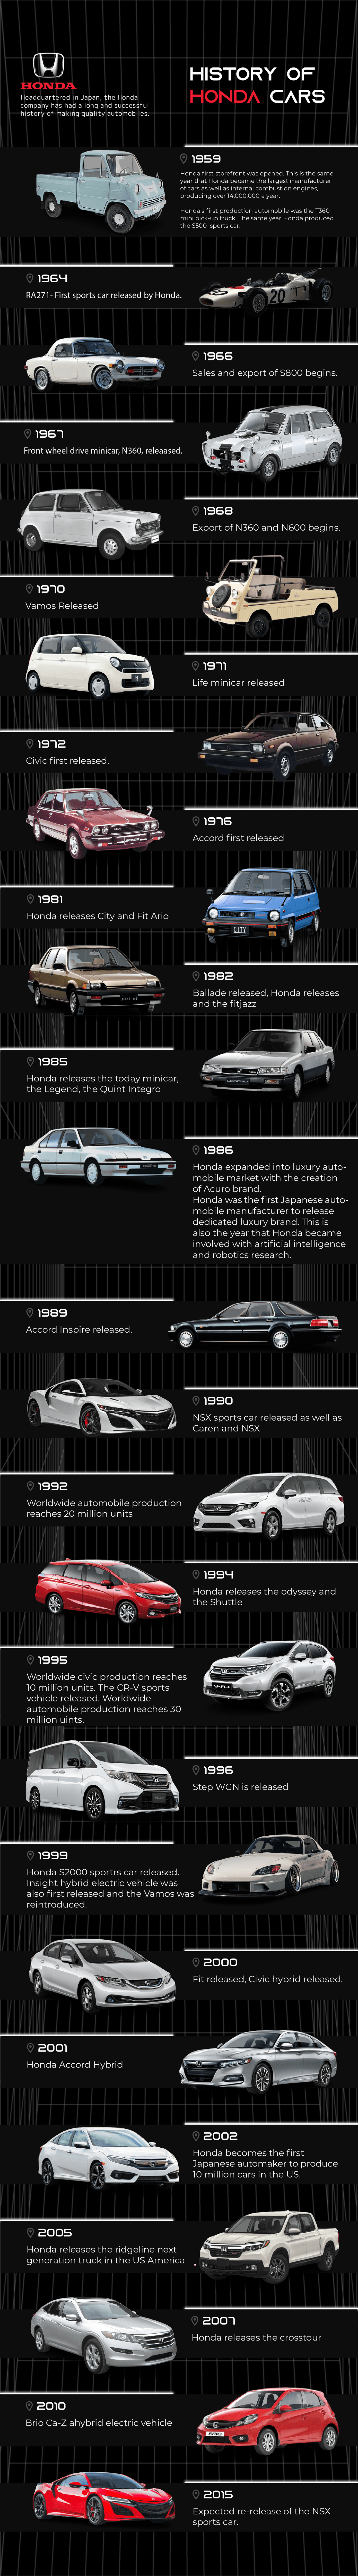 History of Honda cars